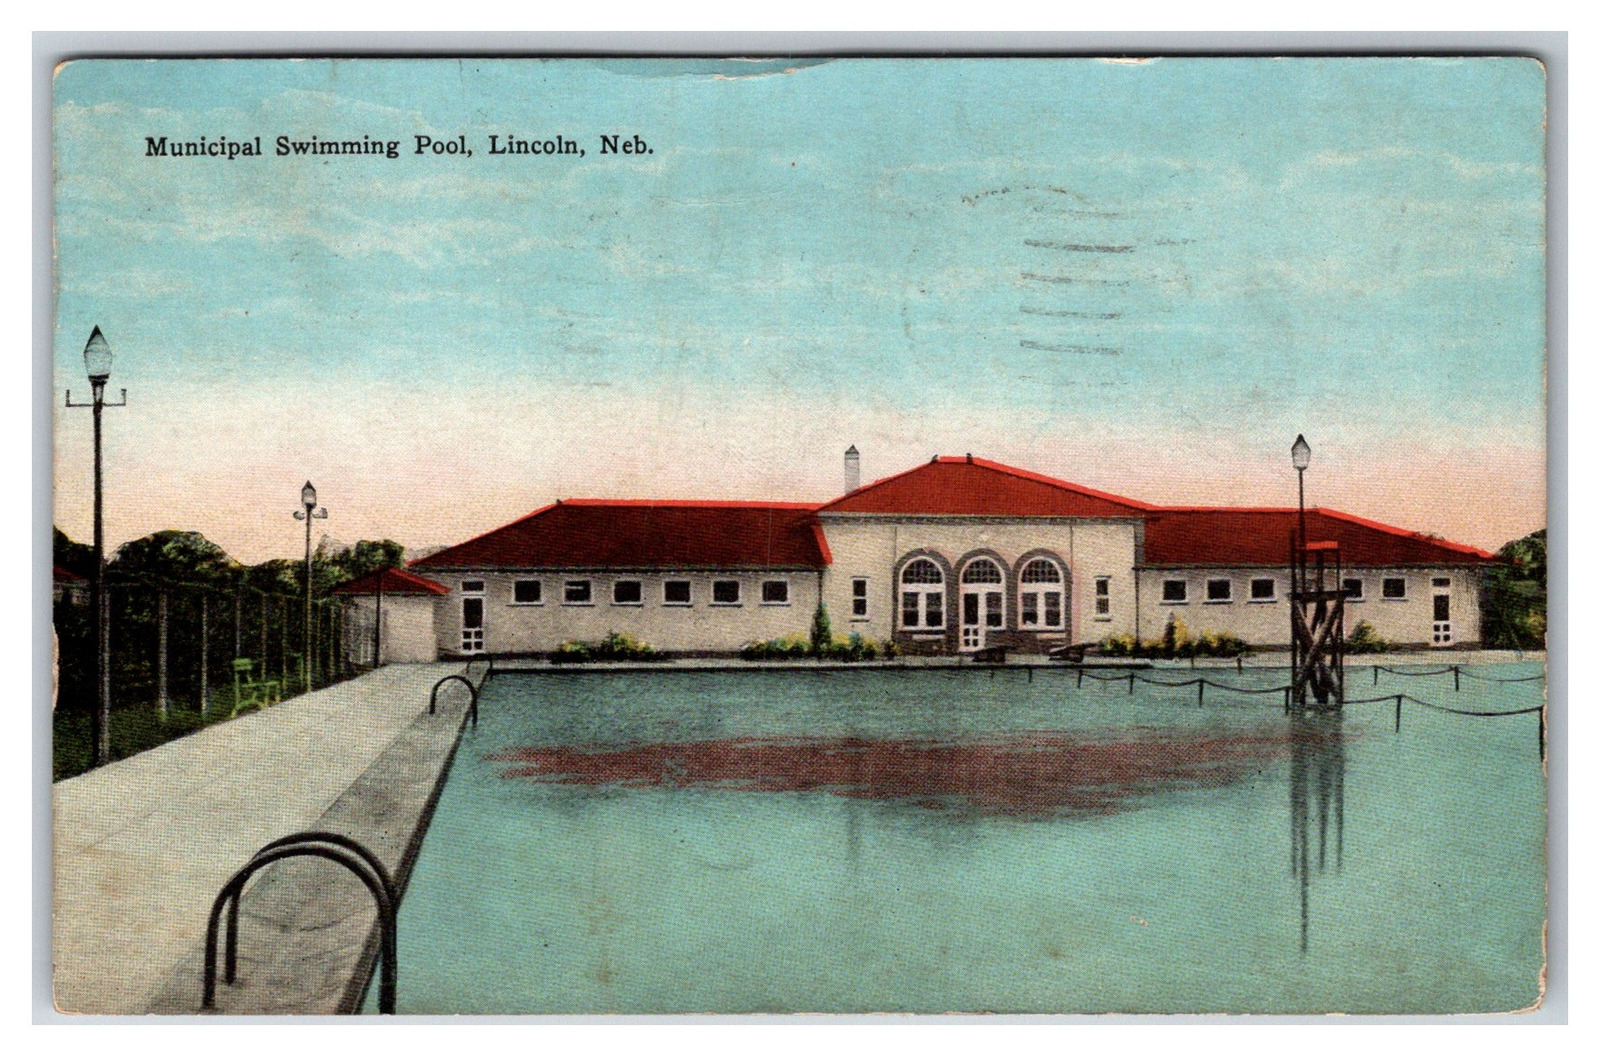 1930 Municipal Swimming Pool, Antelope Park, Lincoln, Nebraska